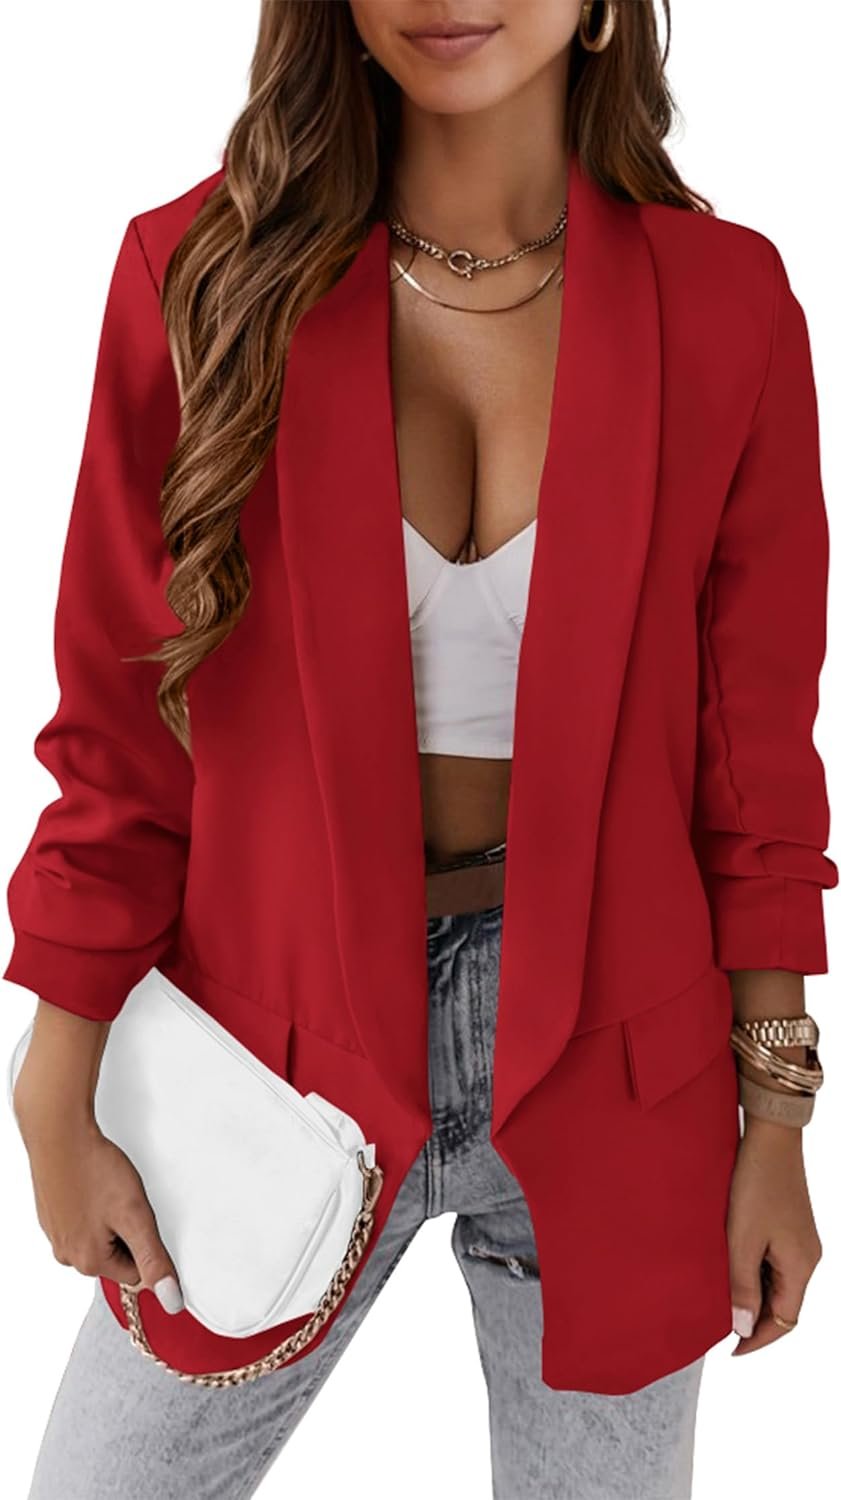 Red Fashion Amazon